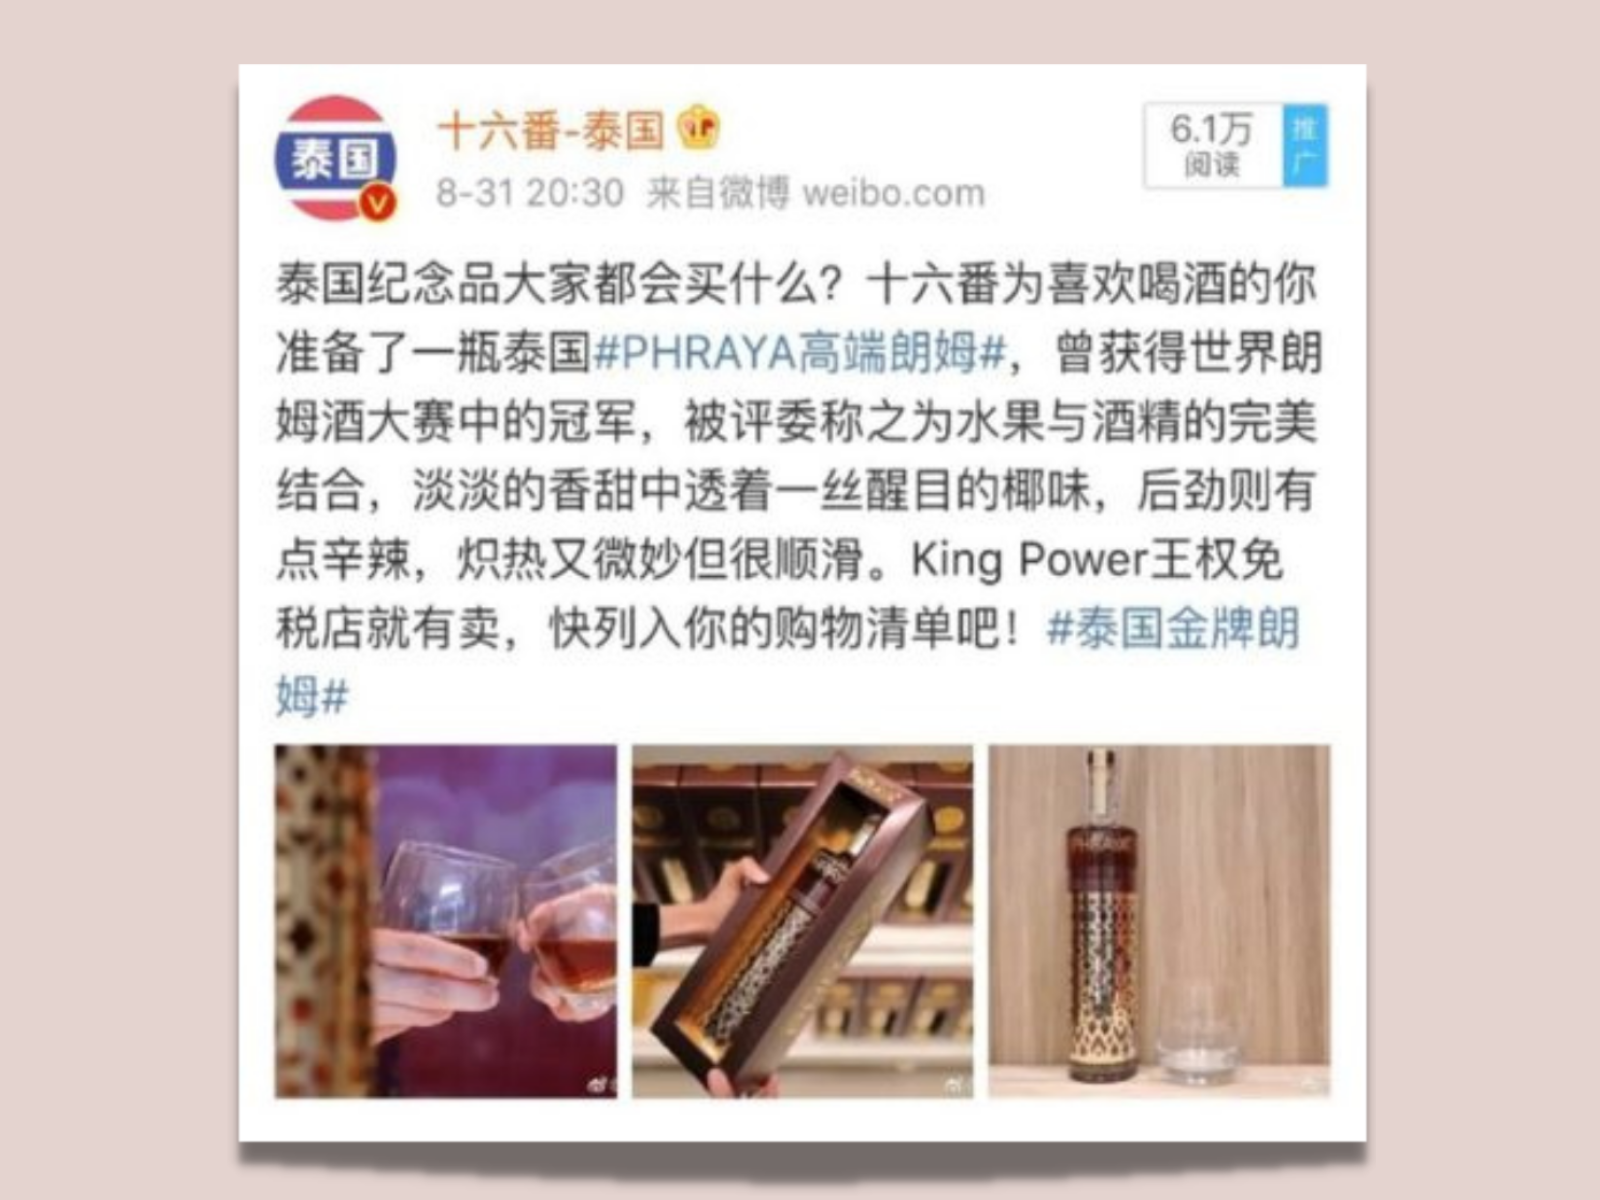 PHRAYA banks Weibo marketing to introduce luxury rums to China